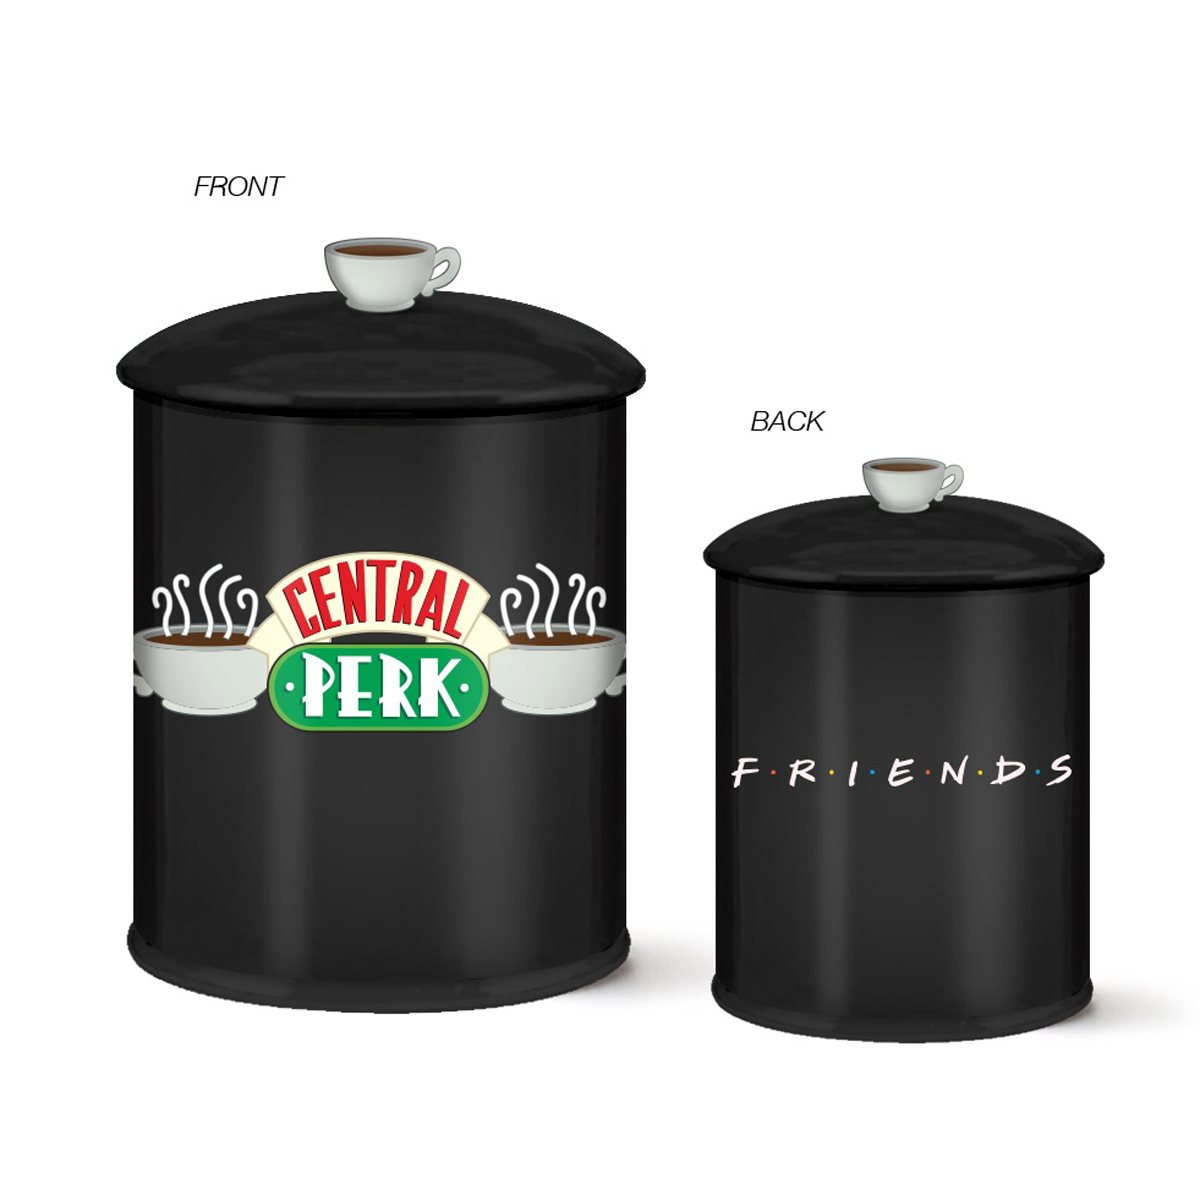 FRD309EG Silver Buffalo Friends Central Perk Black Large Canister Ceramic Cookie Jar 